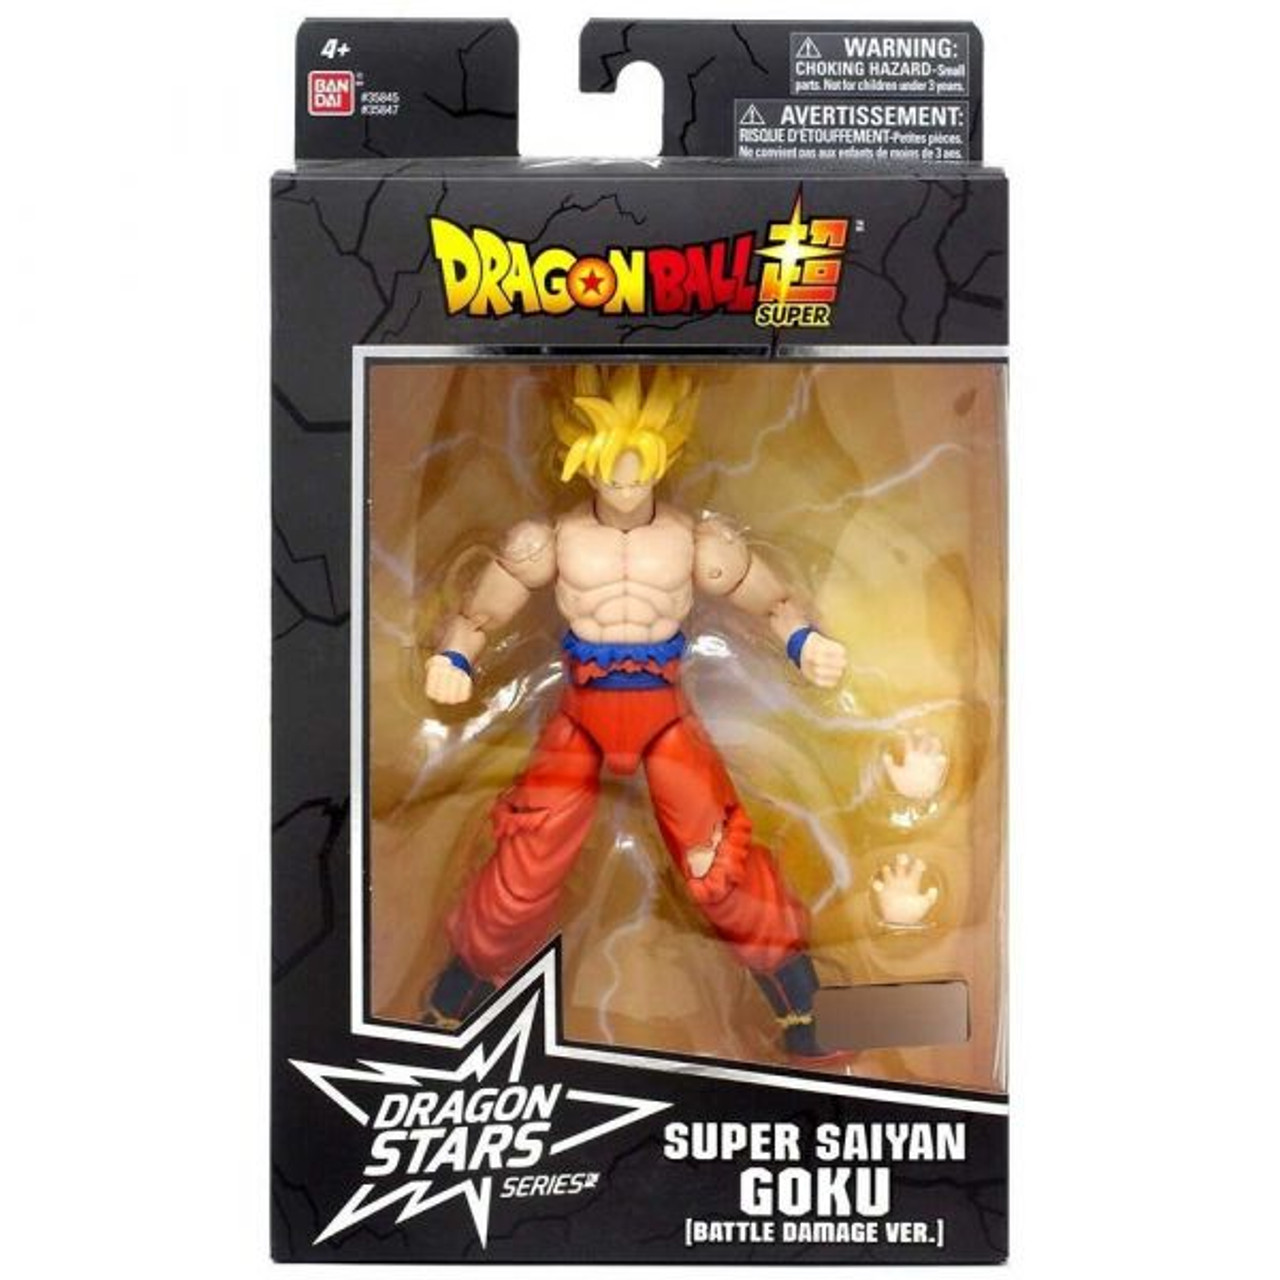 Dragon Ball Super - Dragon Stars Super Saiyan Goku Battle Damaged Version  (Gamestop exclusive) action figure